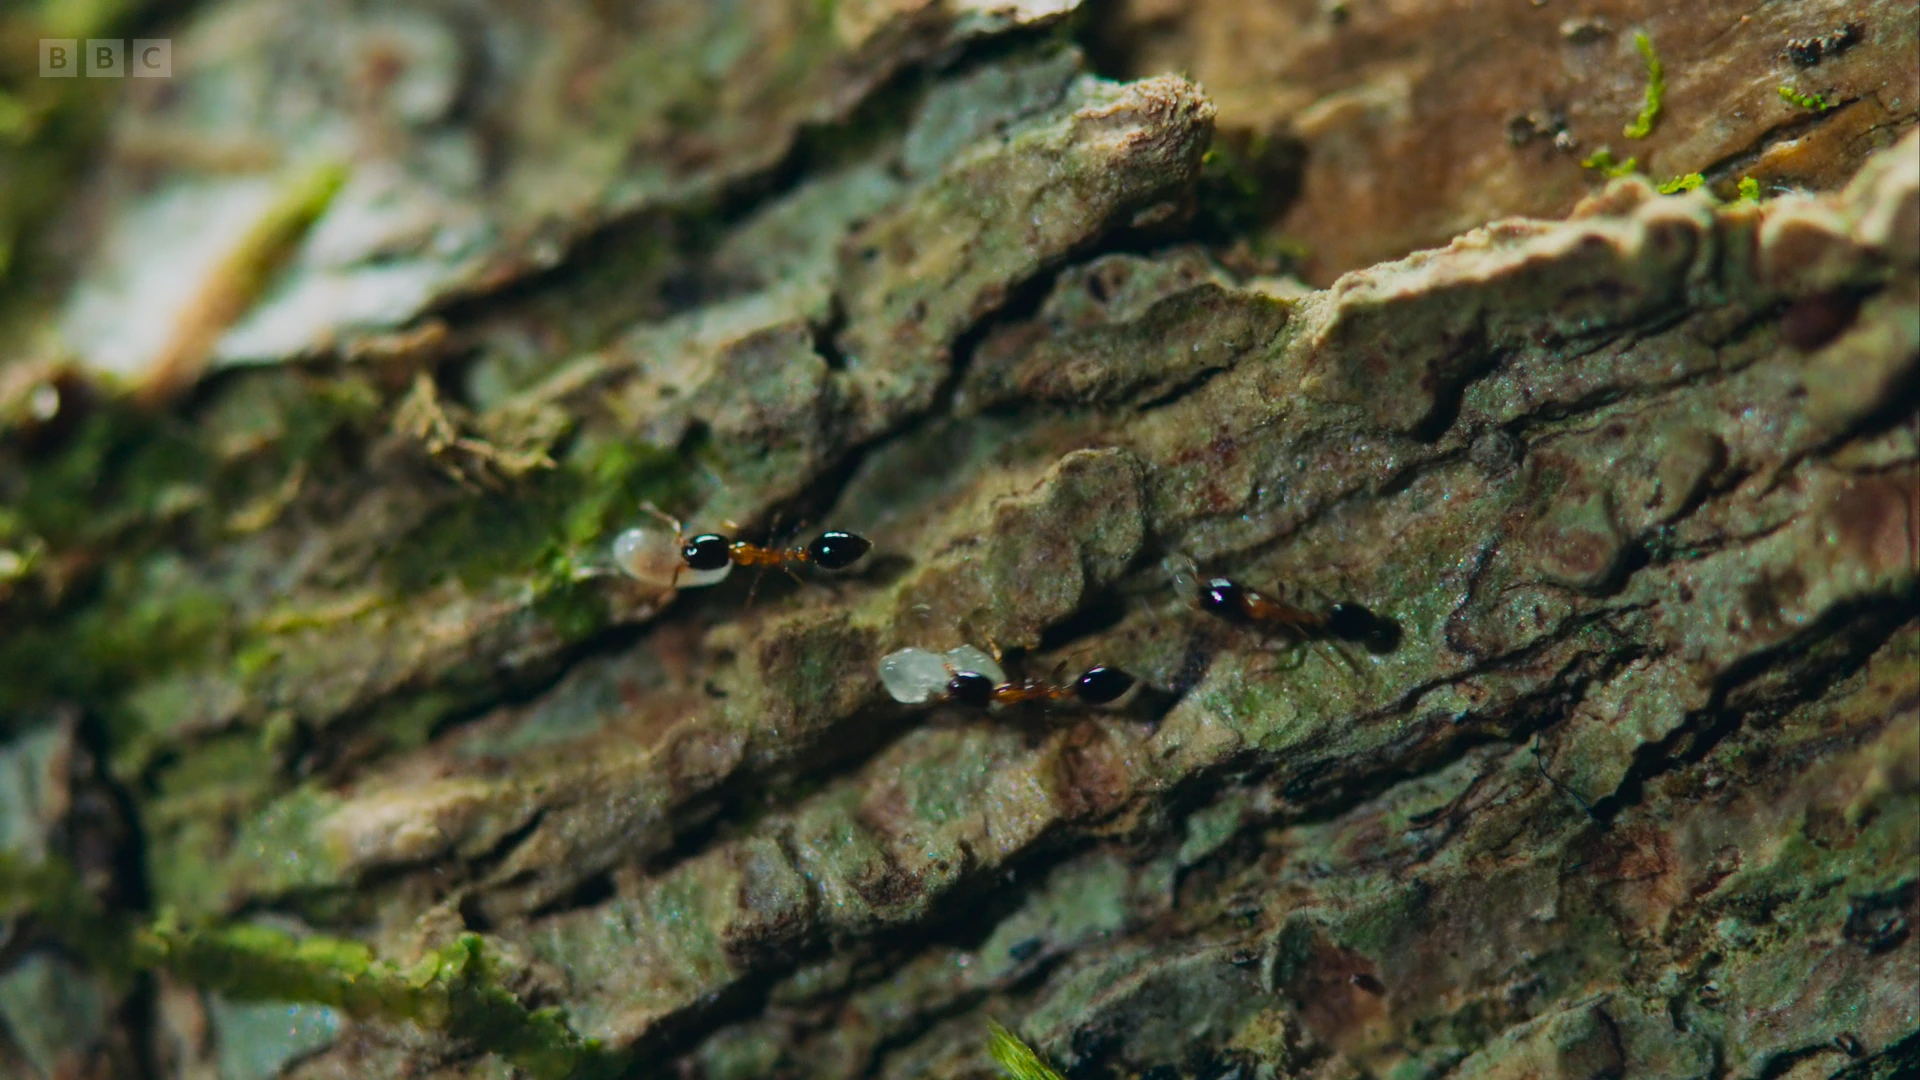 Bicoloured trailing ant (Monomorium floricola) as shown in Planet Earth II - Jungles